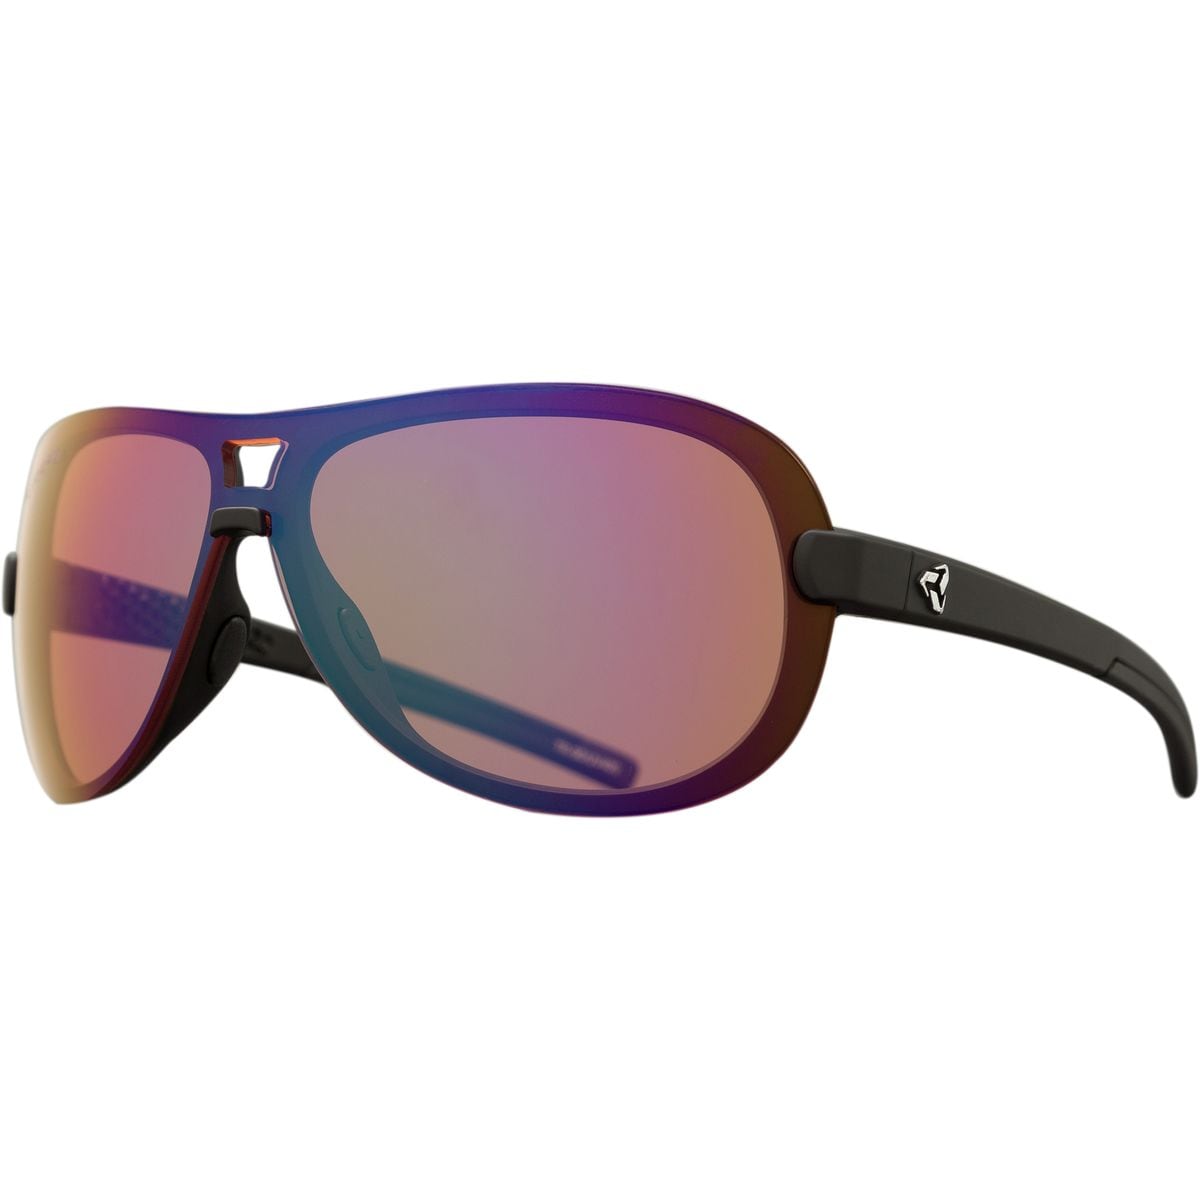 Ryders Eyewear Aero Photochromic Sunglasses - Women's